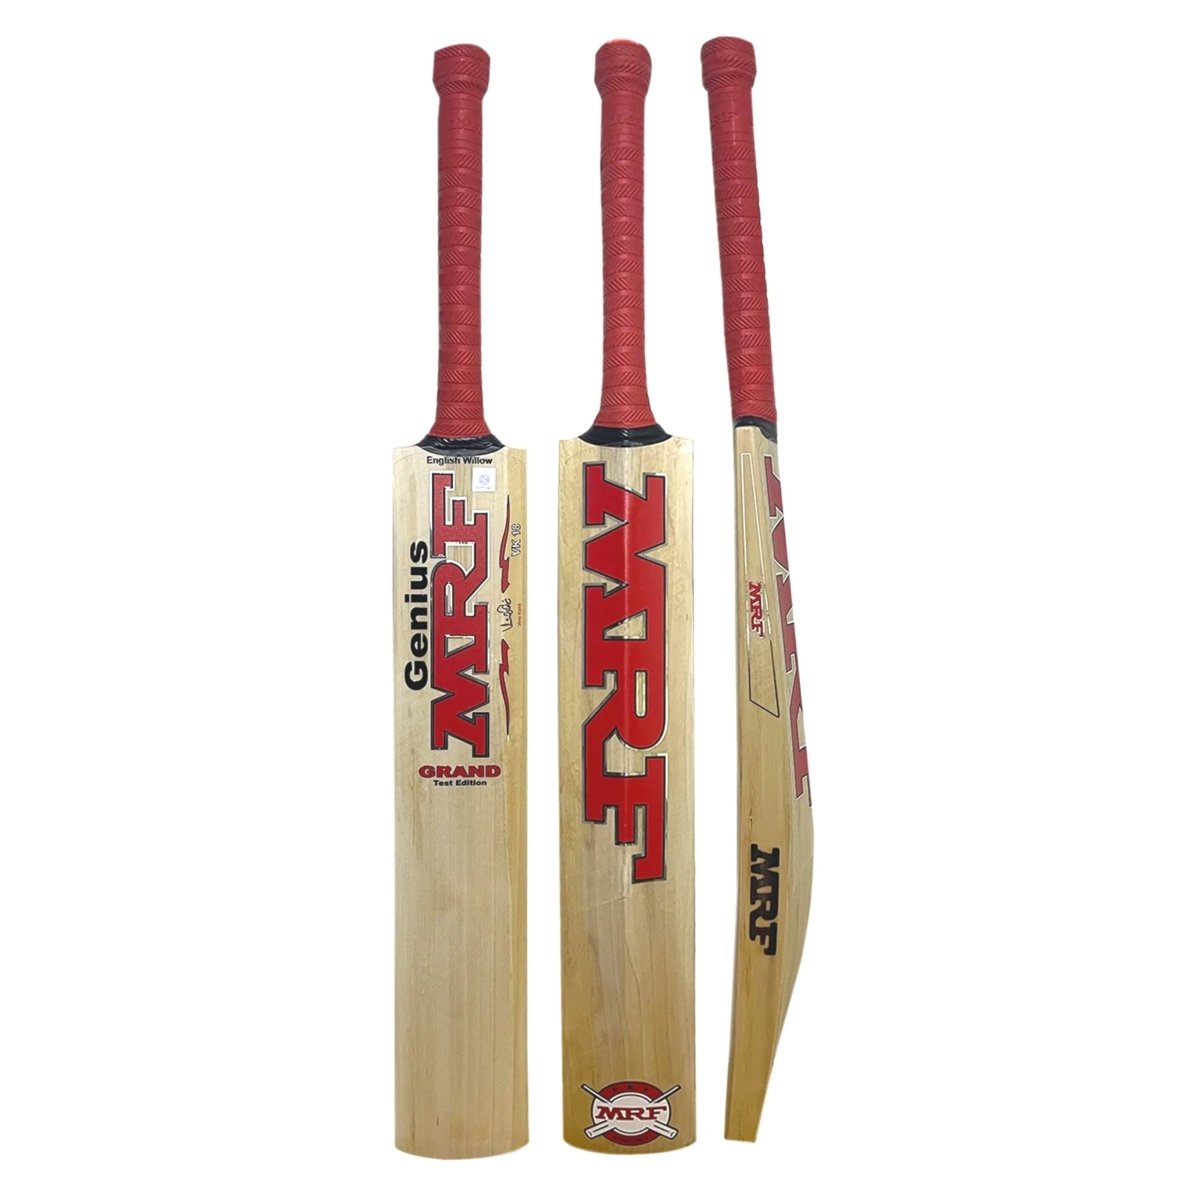 MRF Genius Grand Test Edition English Willow Cricket Bat - Acrux Sports